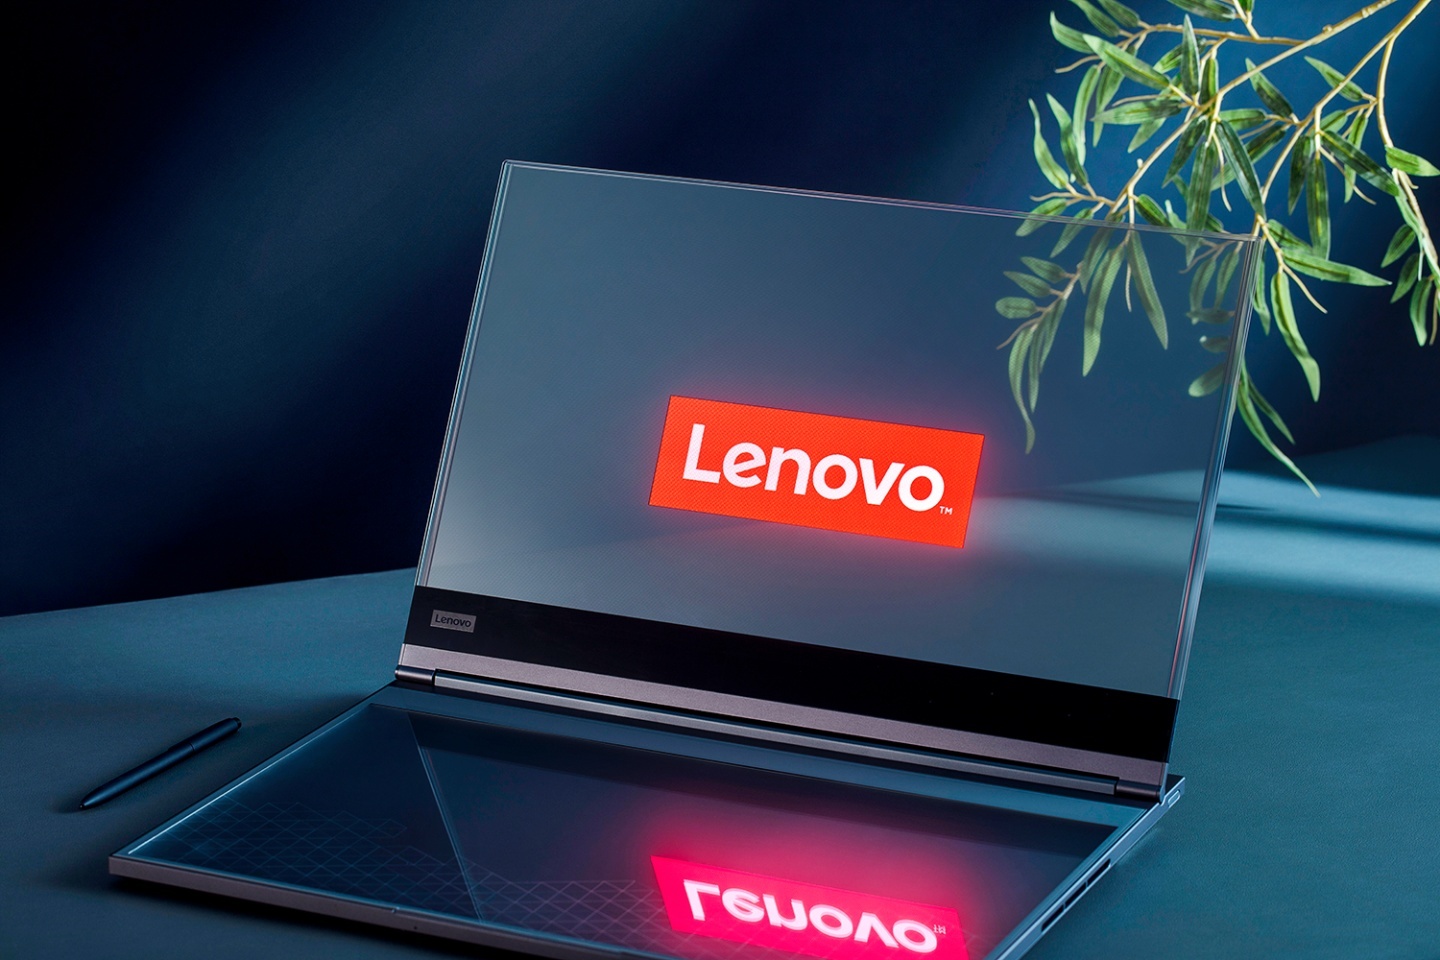 Lenovo ThinkBook 透明螢幕概念筆電在 MWC 亮相！具有 17.3 吋的透明螢幕，還內建了一塊繪圖板